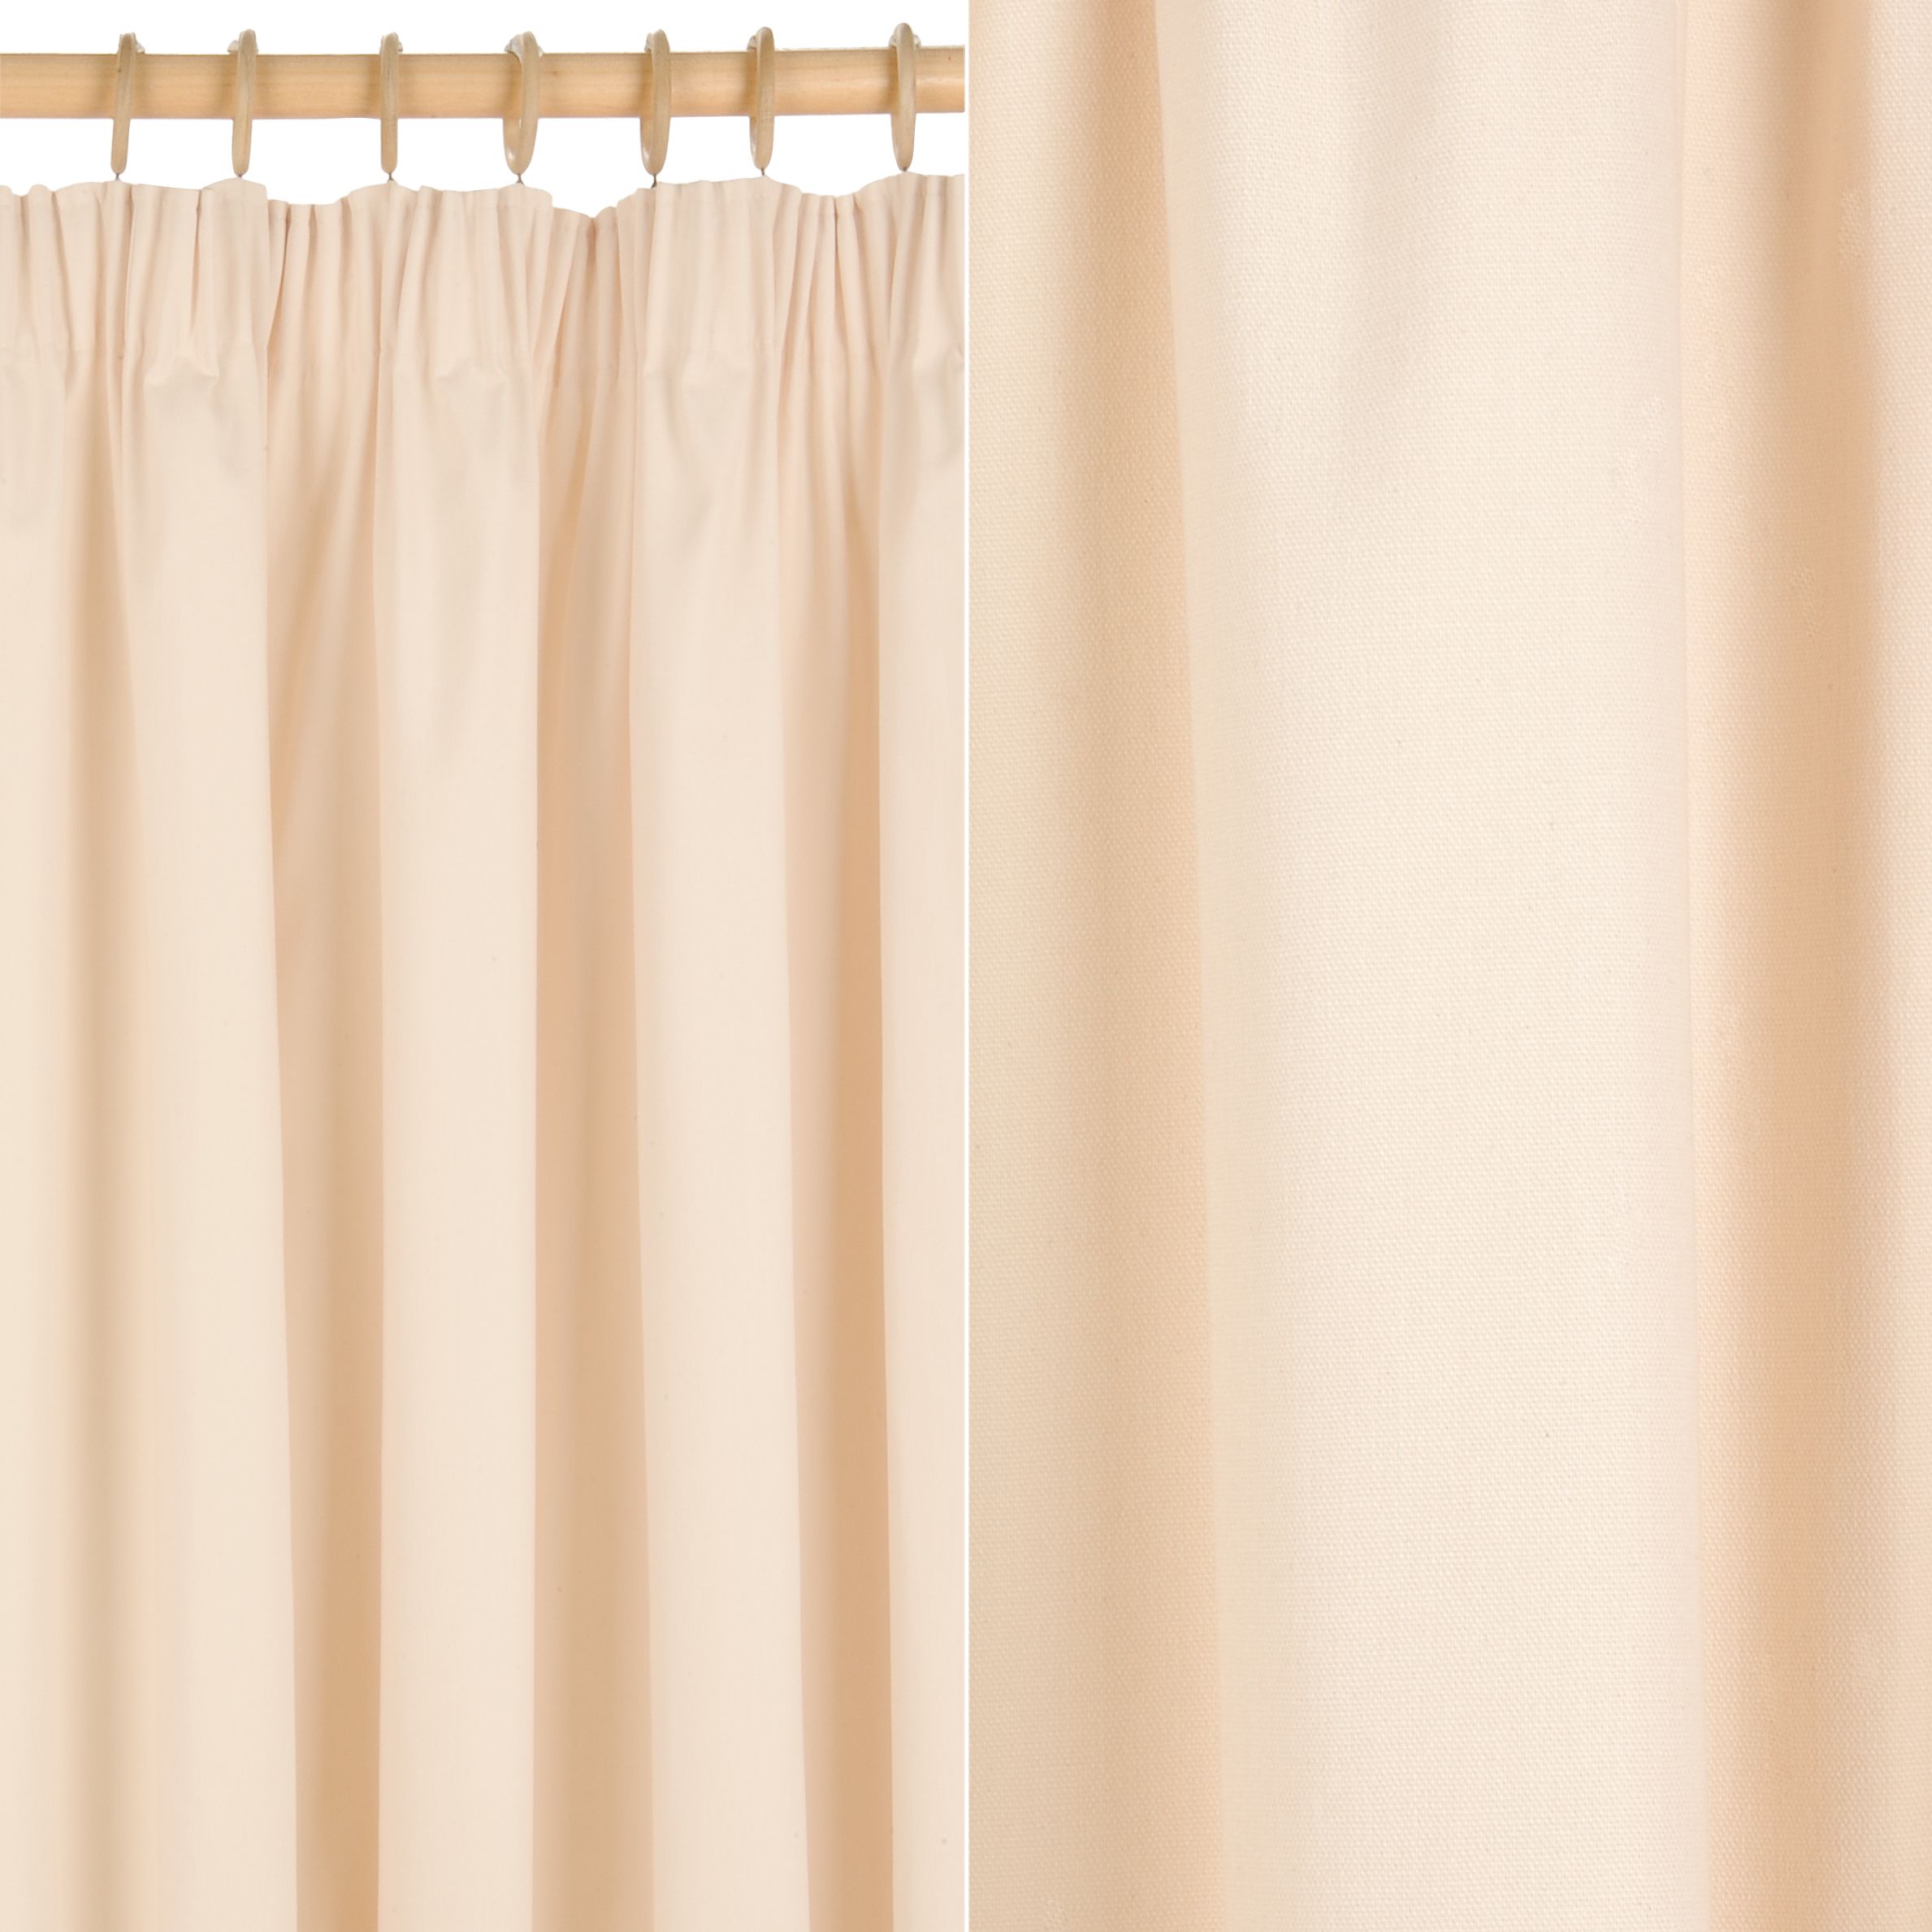 Inverness Pencil Pleat Curtains, Cream, W196 x